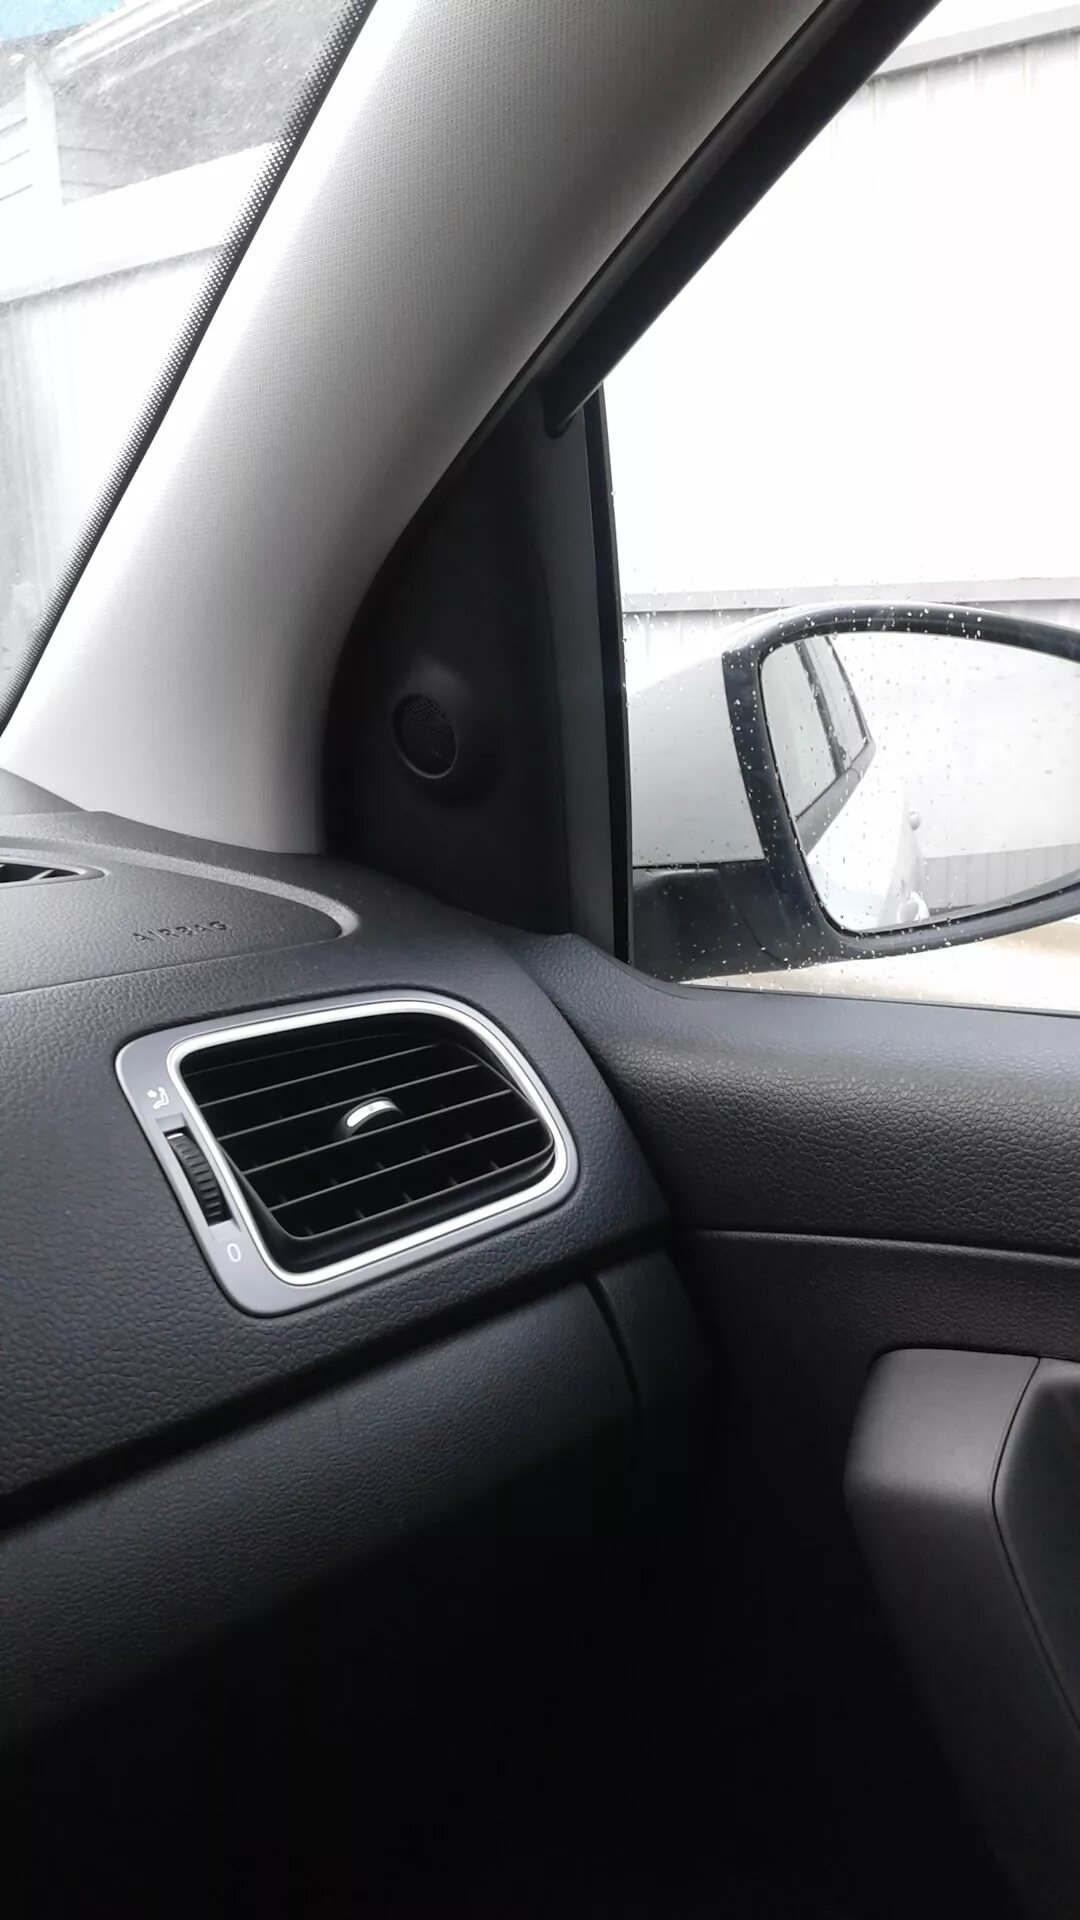 Уголки зеркал Фольксваген поло 2013. Volkswagen Polo sedan салонное зеркало. Зеркало поло Фольксваген поло. Volkswagen polo зеркала